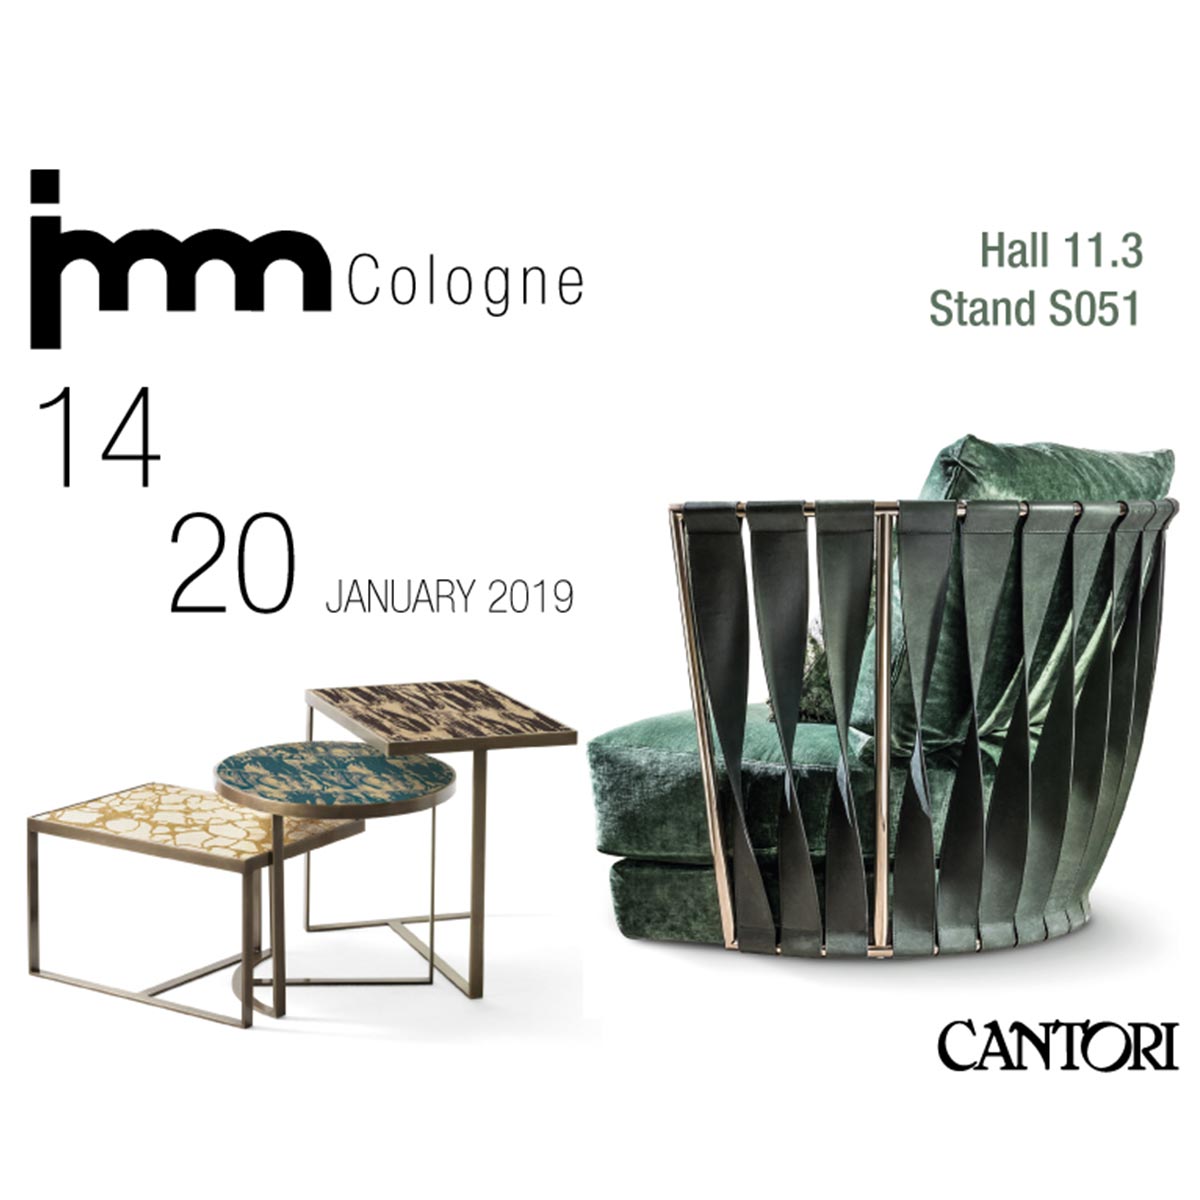 Cantori at Imm Cologne 2019 - Cantori